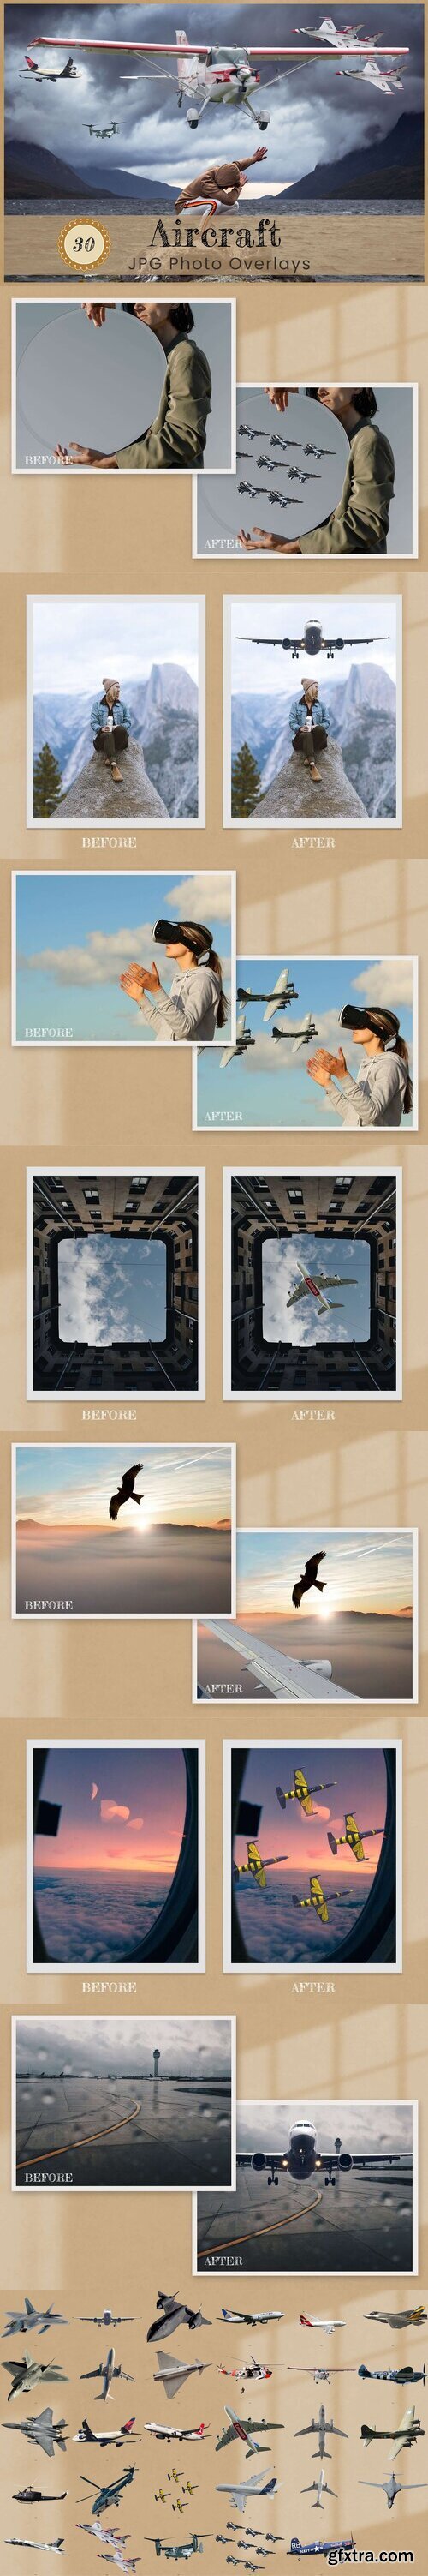 CreativeMarket - Aircraft Photoshop Editing Overlays 7052013